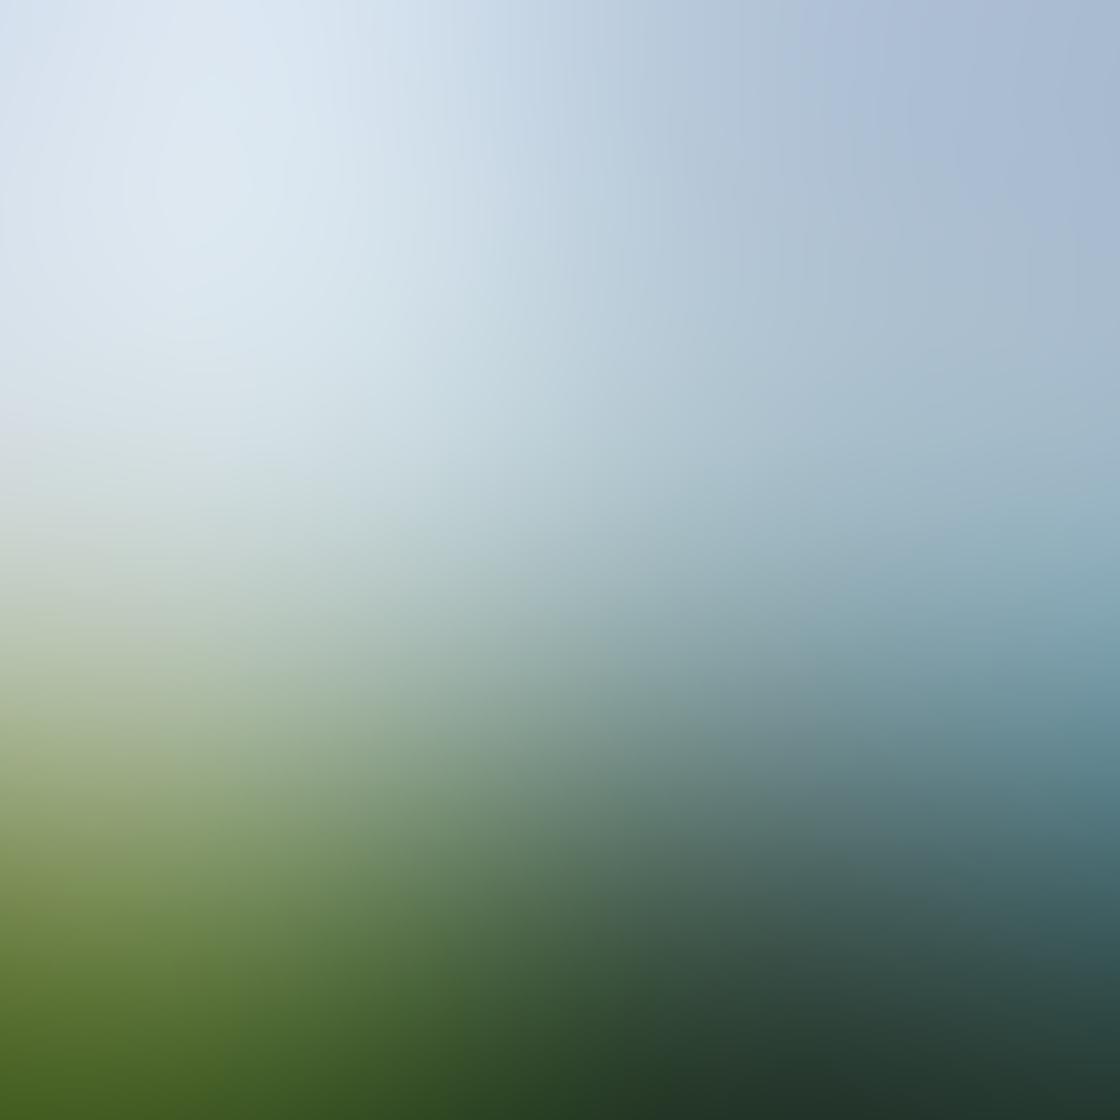 Unduh 750 Background Blur Gratis Terbaru